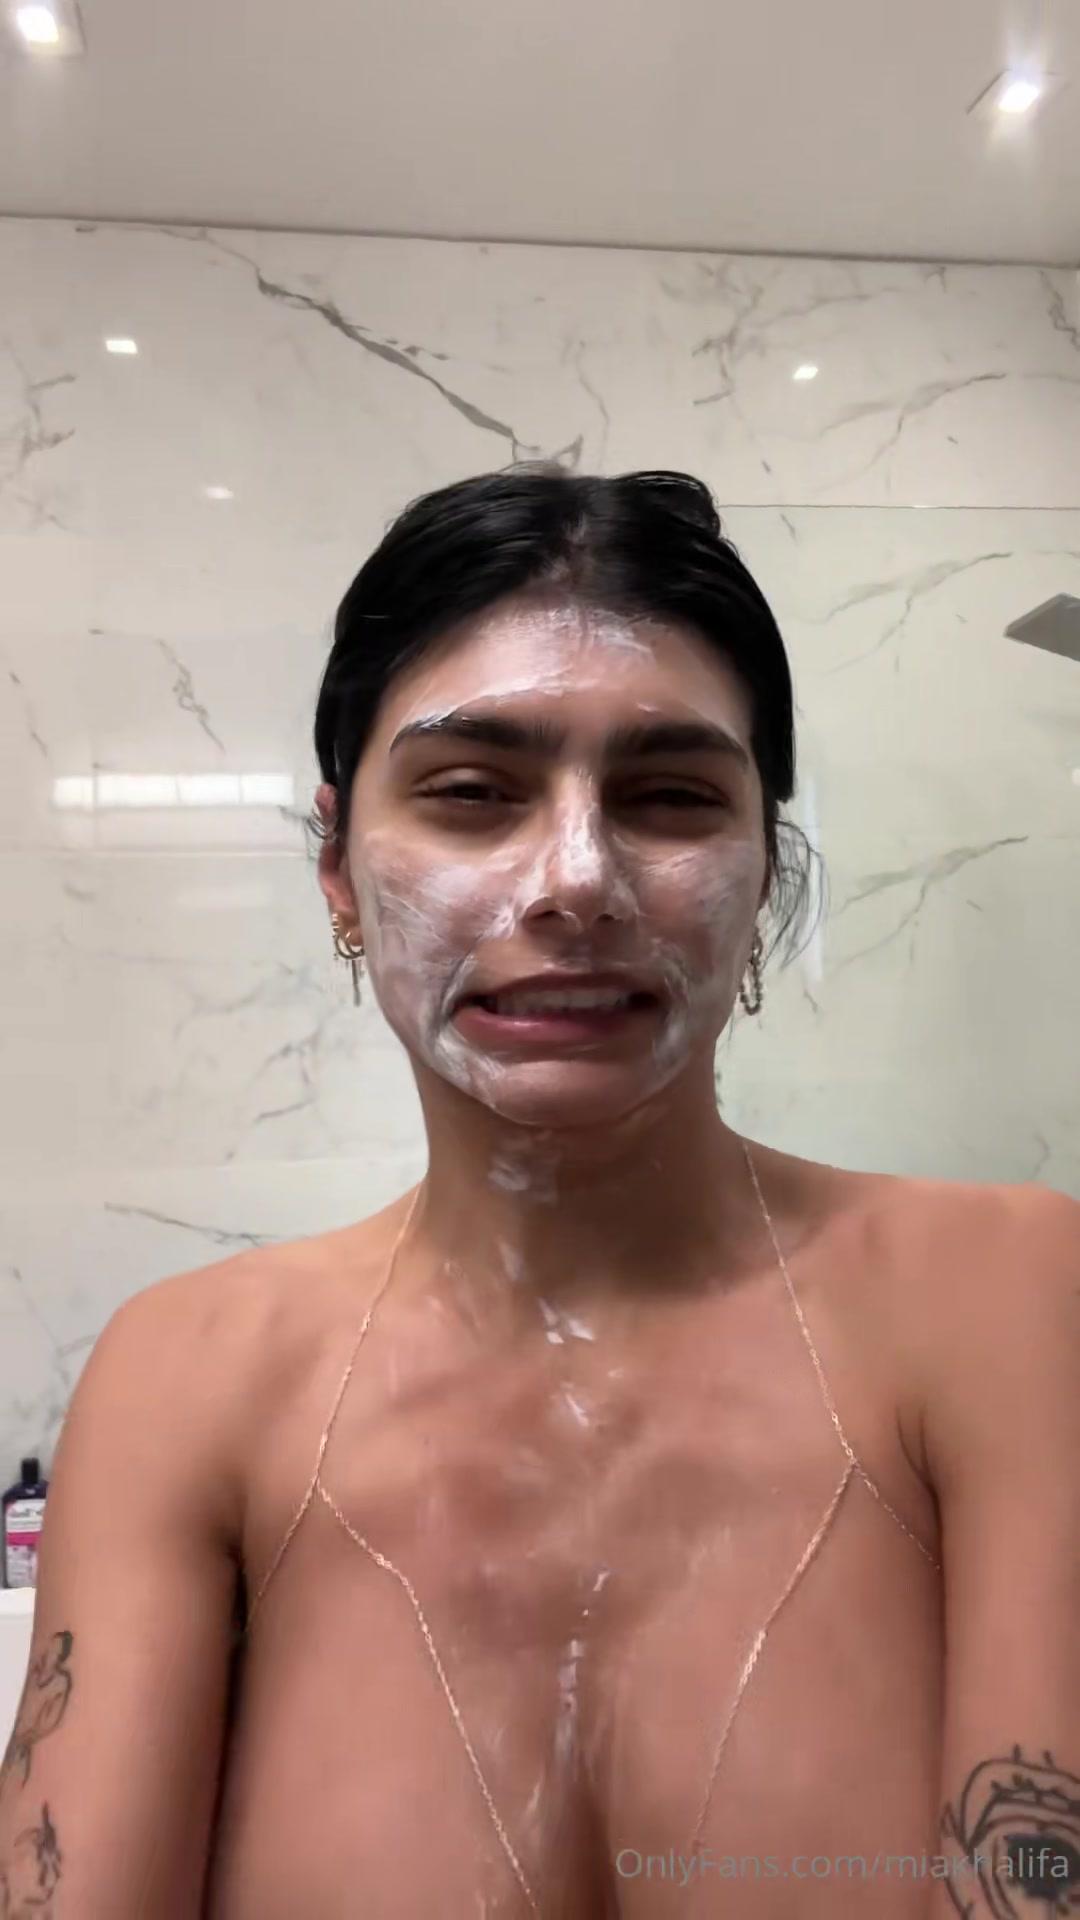 mia khalifa nude shower prep part 2 onlyfans video leaked egmwjt